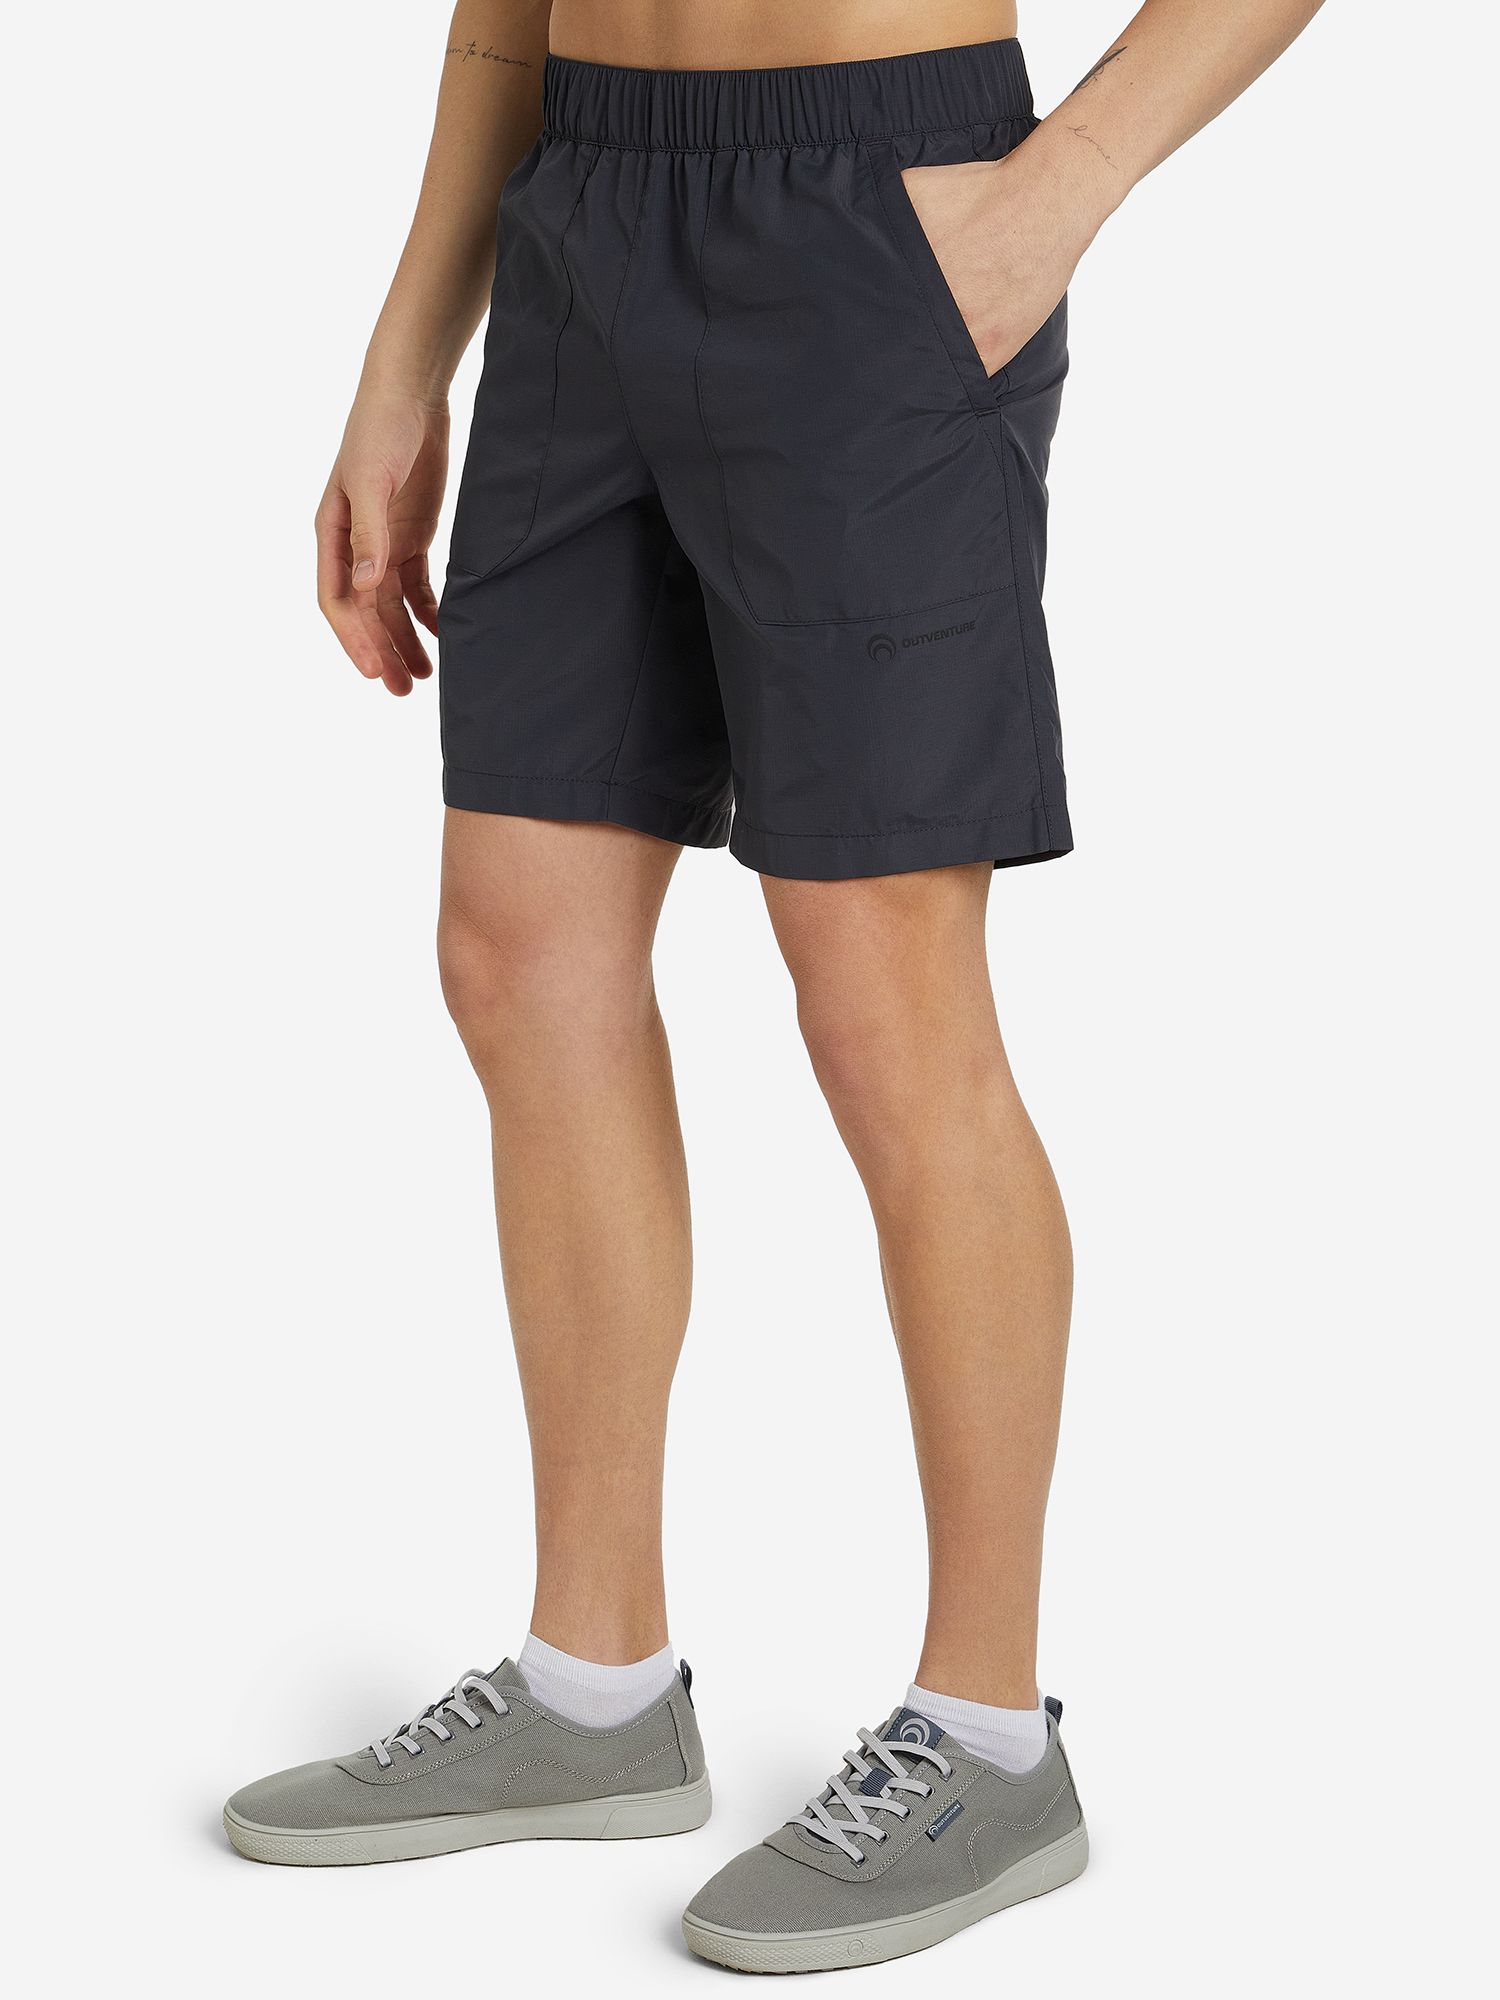 Шорты Джома синие. Шорты 4f men's functional shorts h4z21-skmf015-20s. Joma шорты синие. Шорты XXL. Шорты екатеринбург